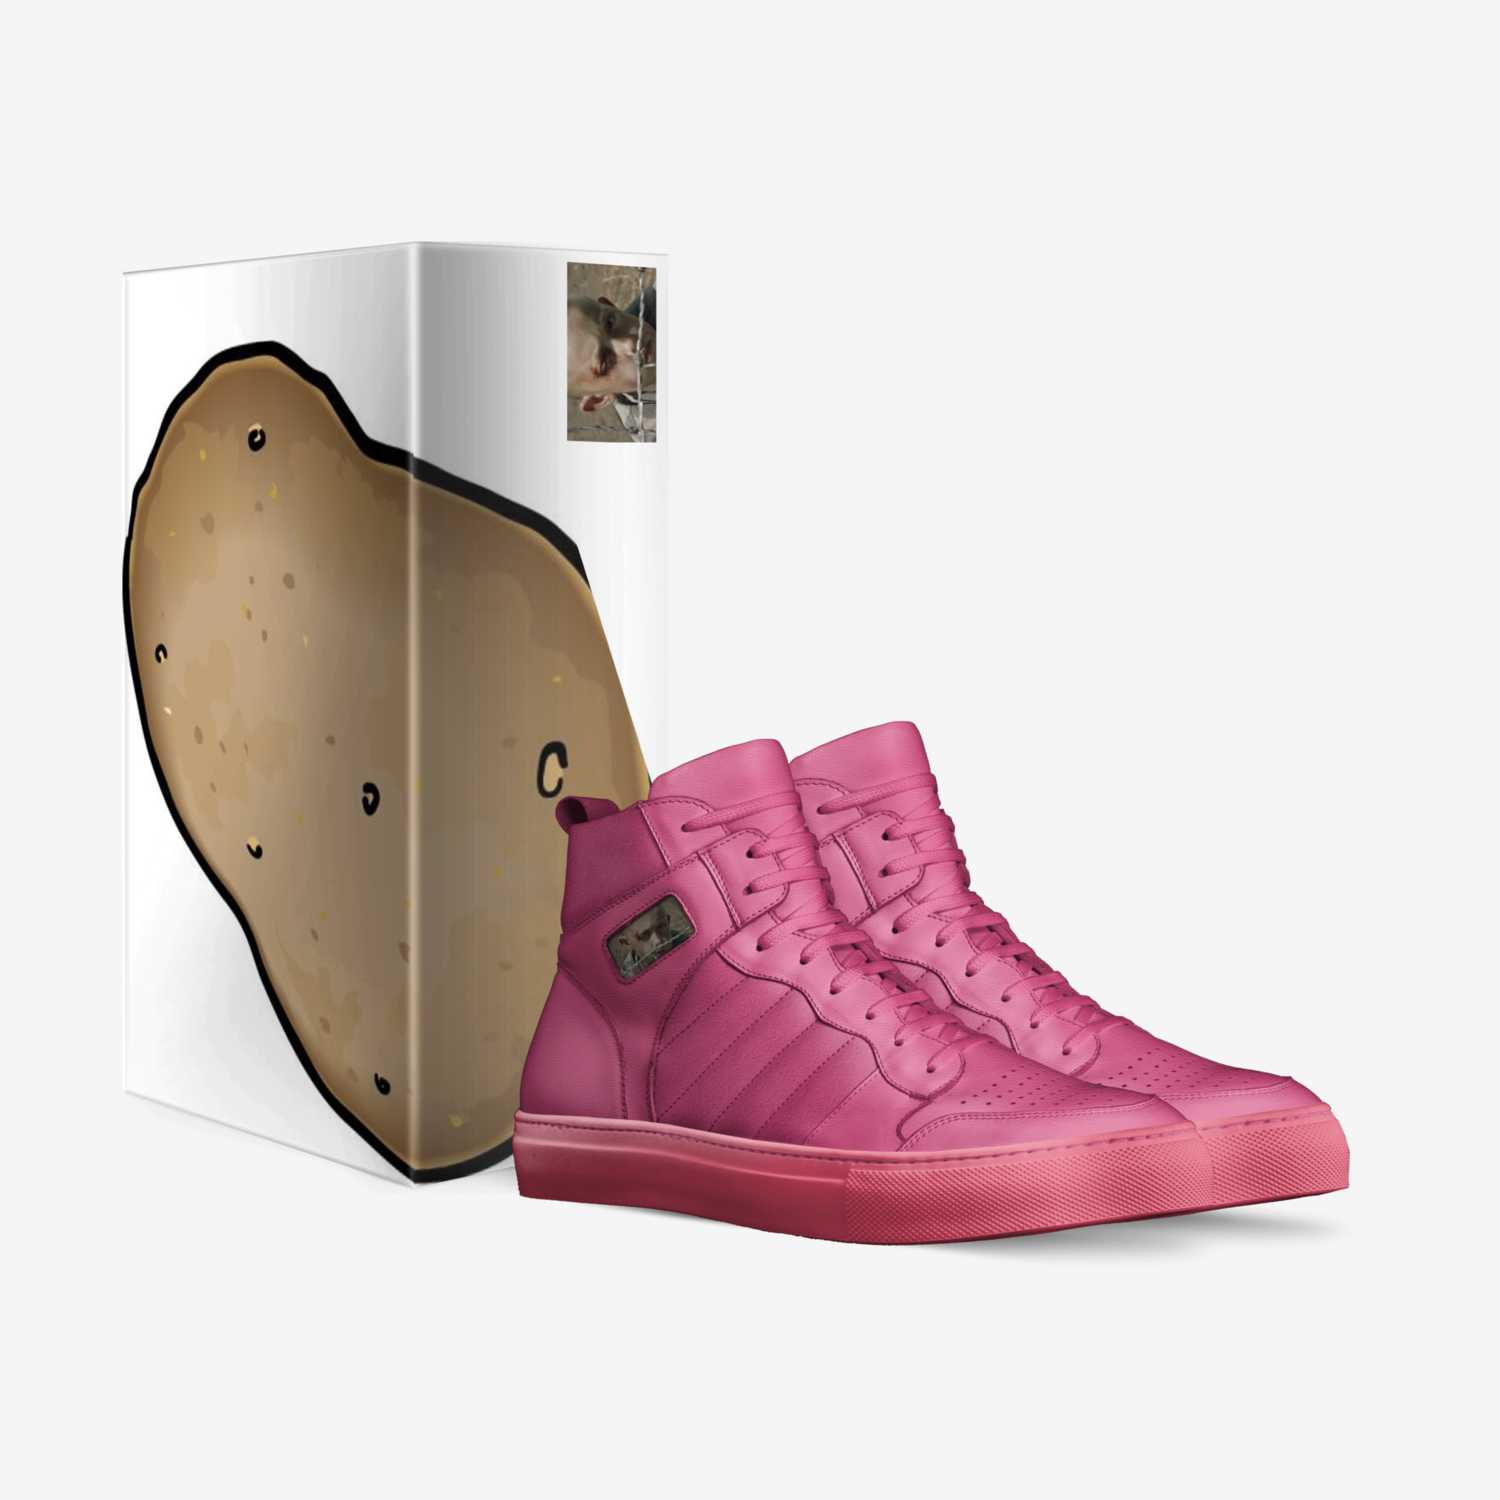 Inurmom custom made in Italy shoes by Dick Inurmom | Box view